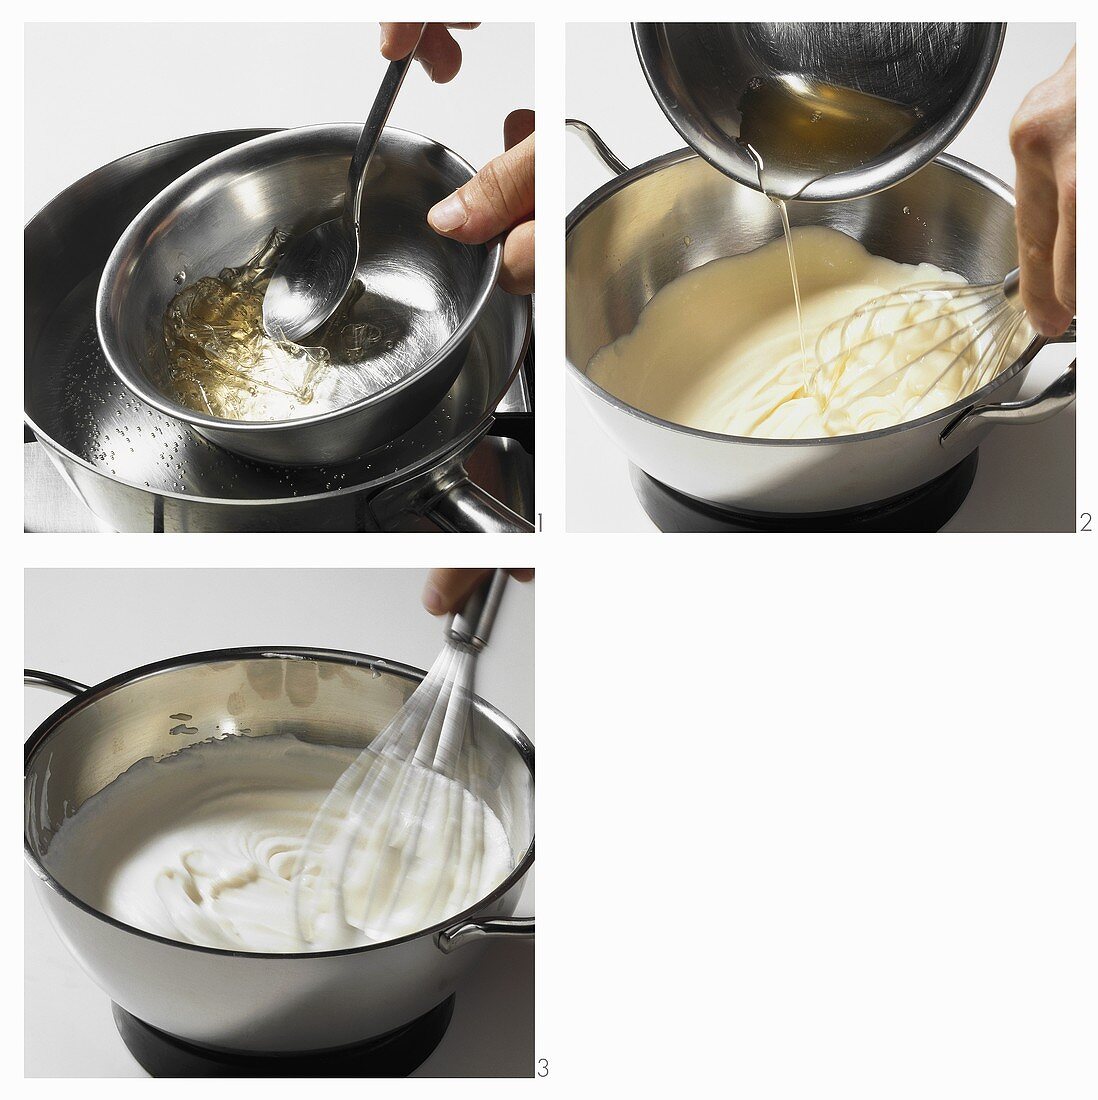 Making cream filling or dessert